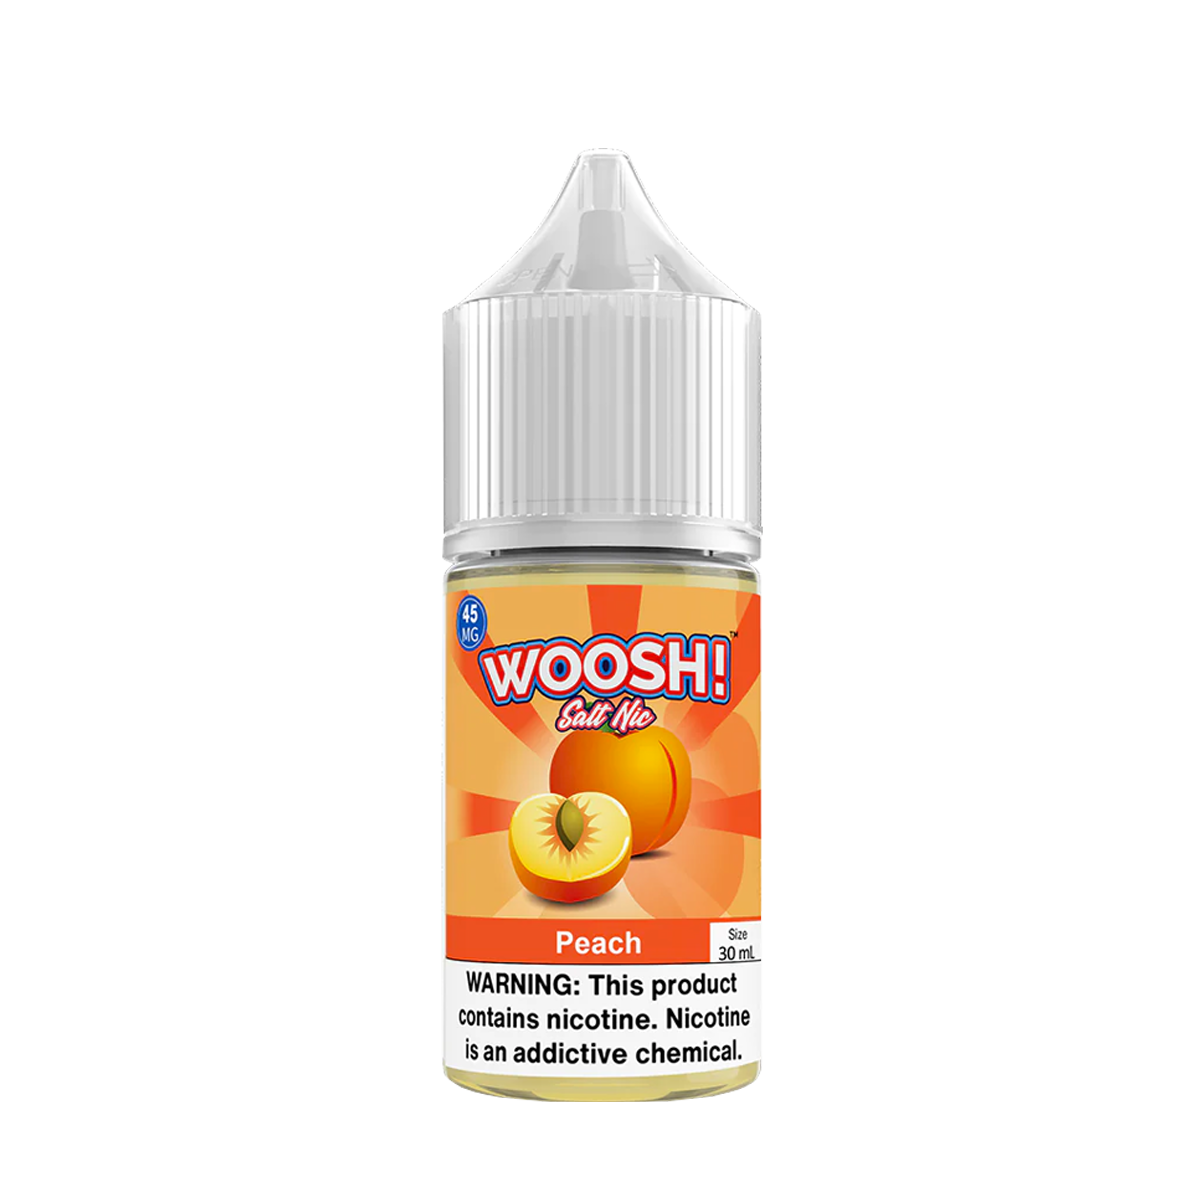 Suorin Woosh Salt Nicontine Vape Juice 45 Mg 30 Ml Peach